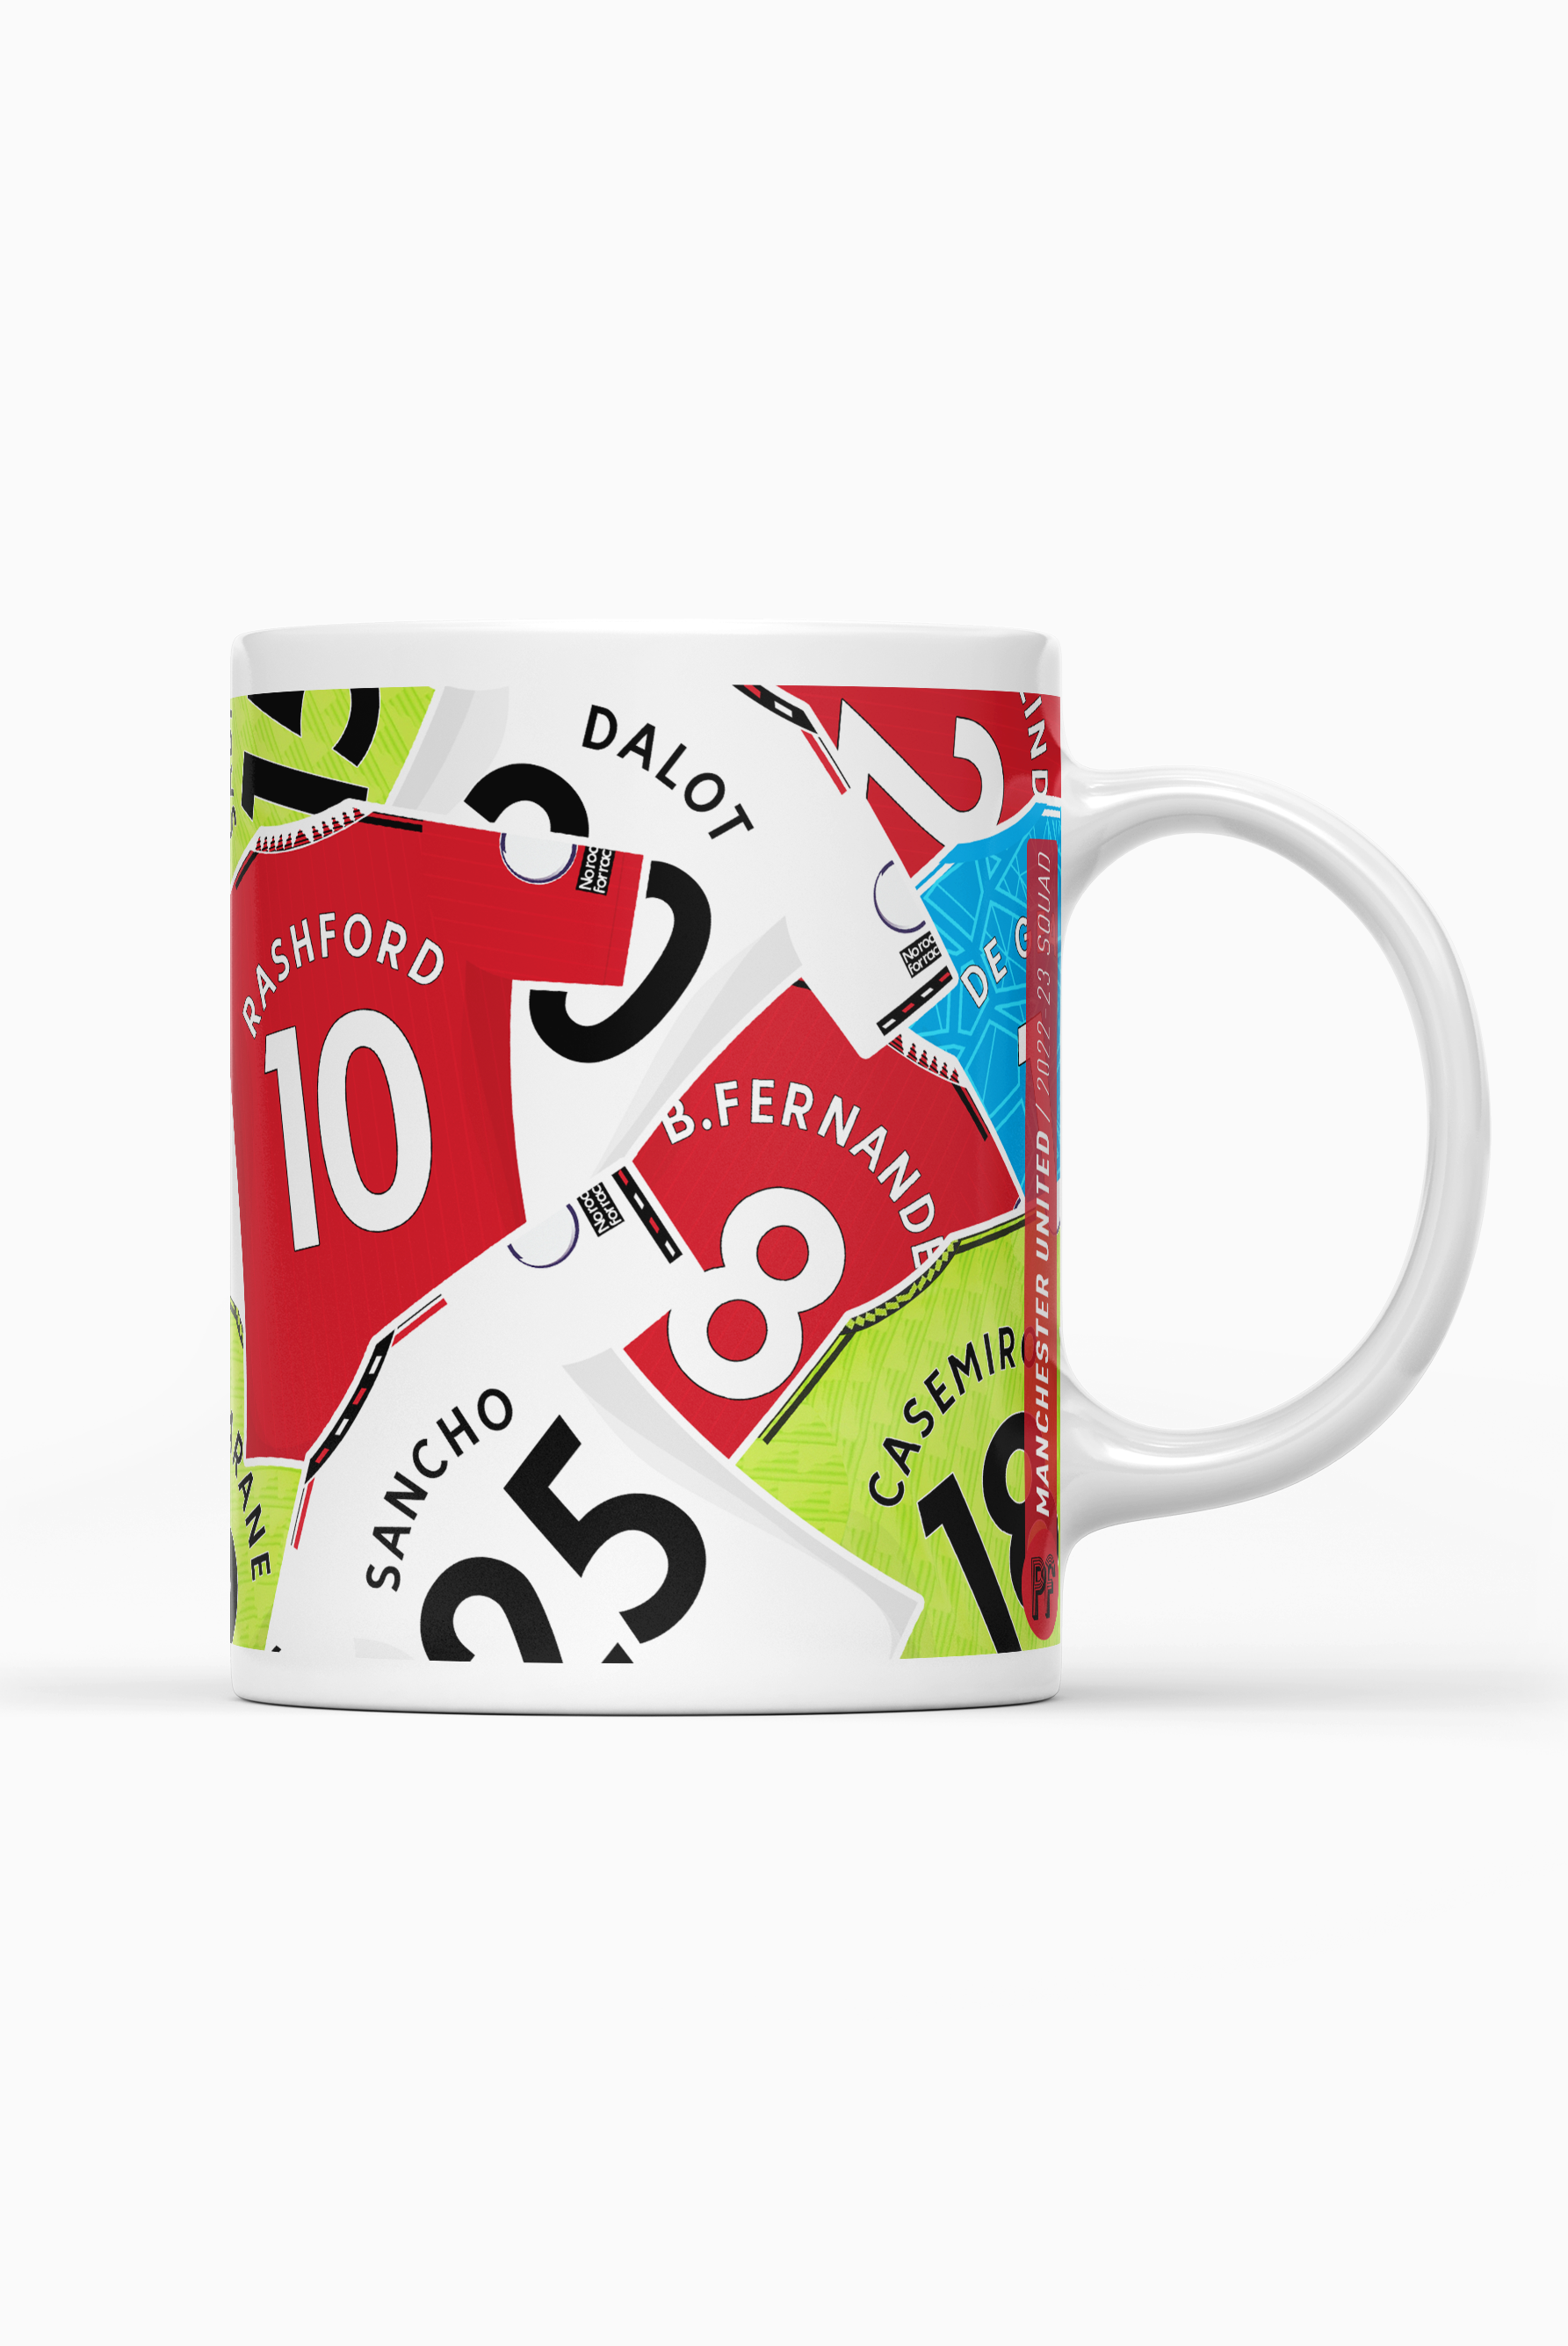 Man United / 2022-23 Squad Mug